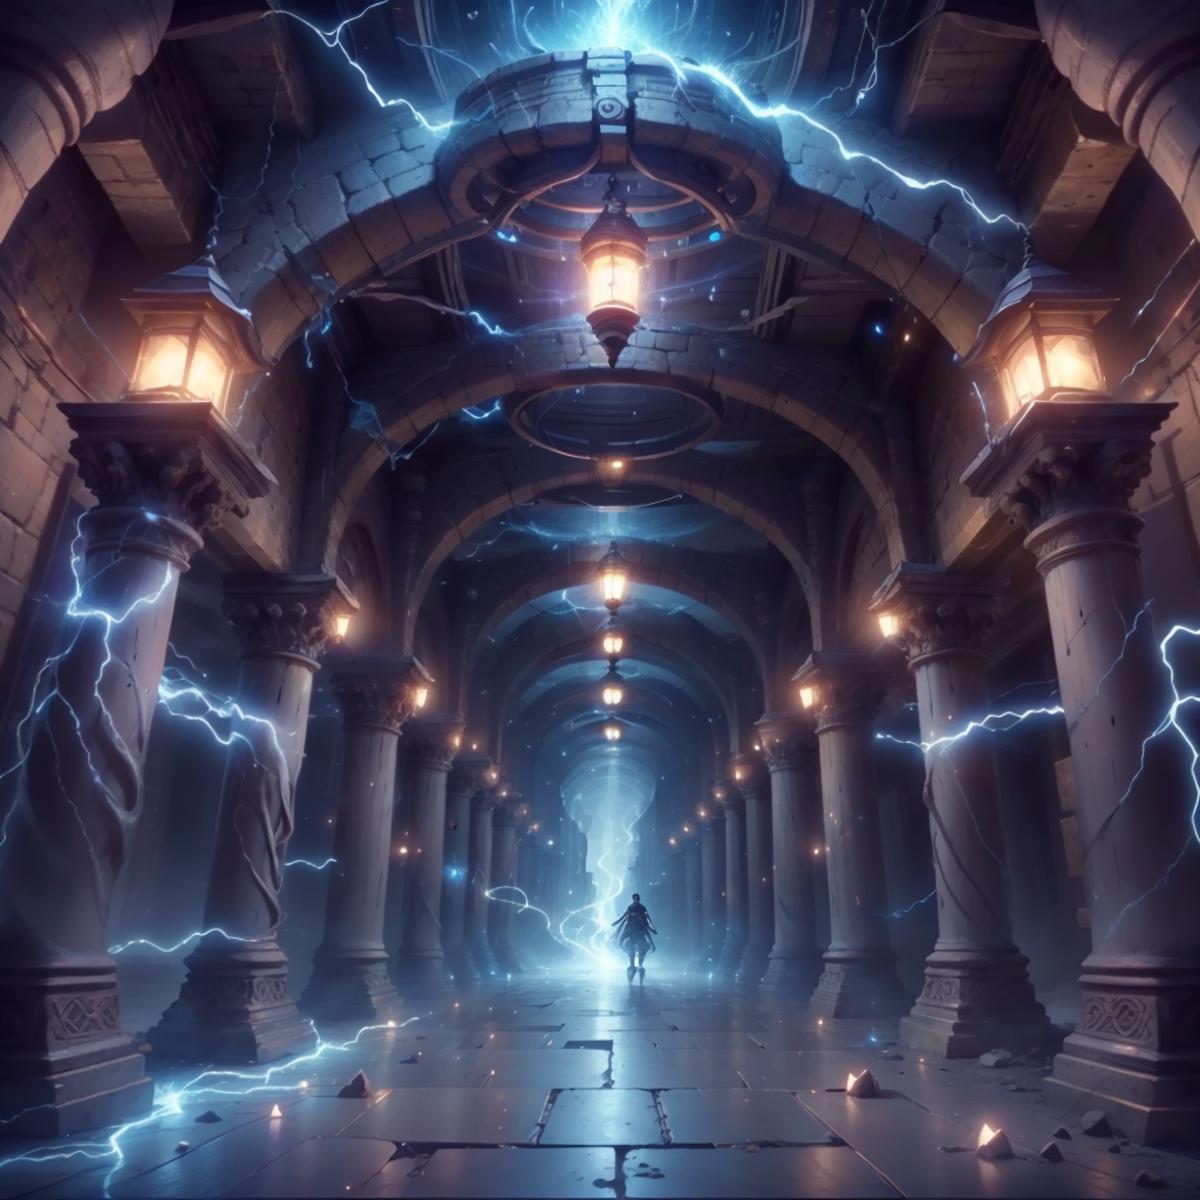 Thunder magic - Grimoire image by navimixu